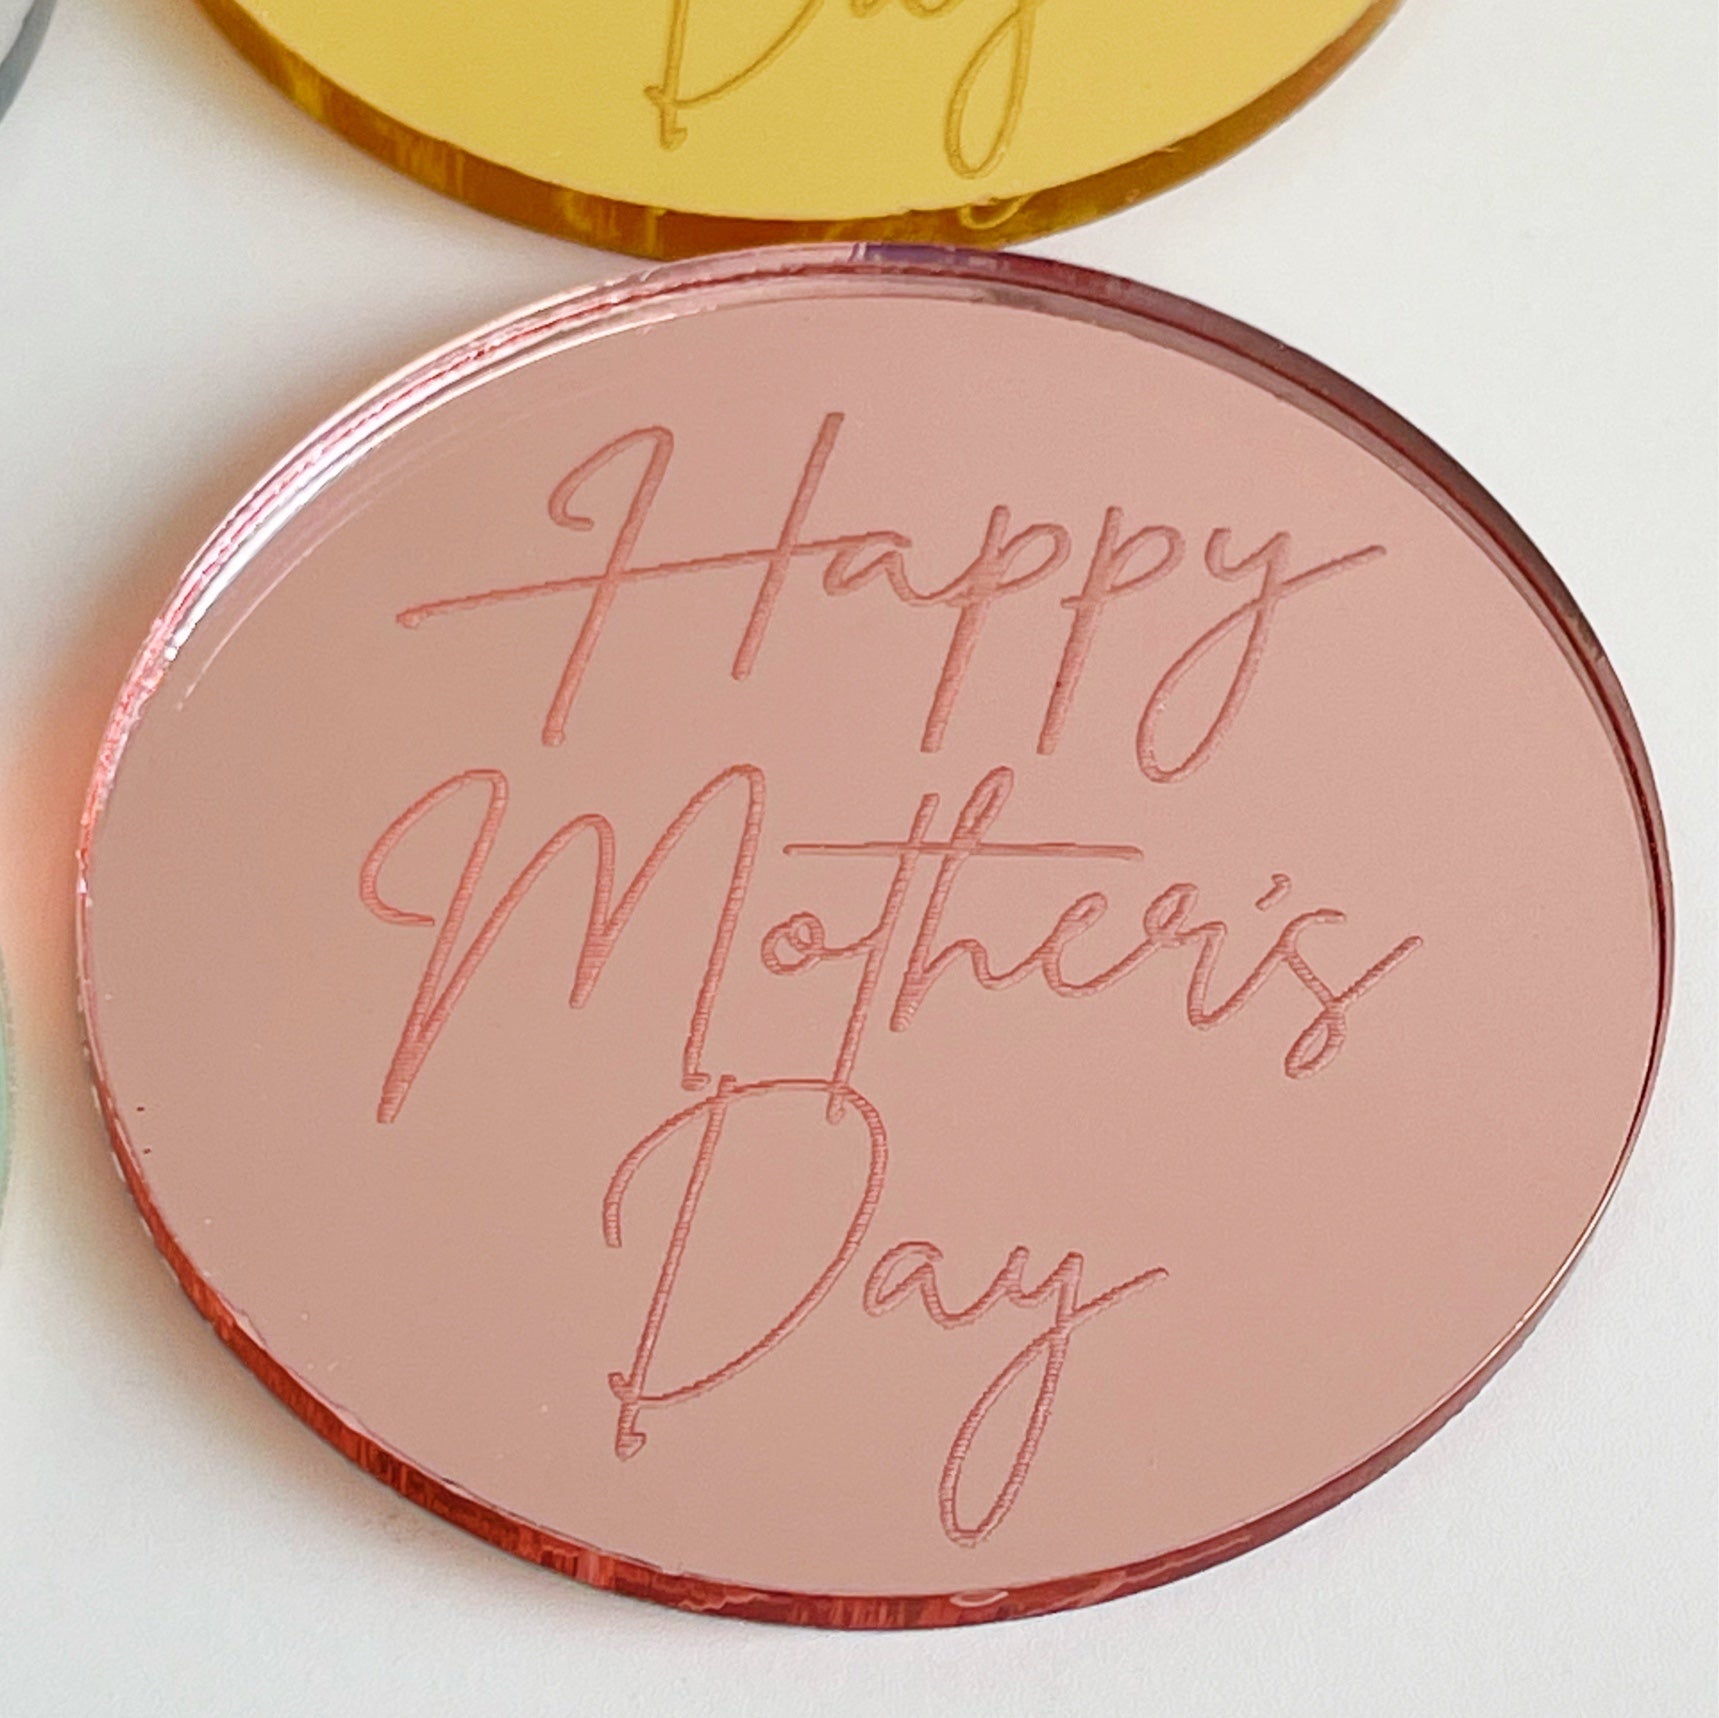 Happy Mother's Day Fancy Script Acrylic Cake Charm Discs.